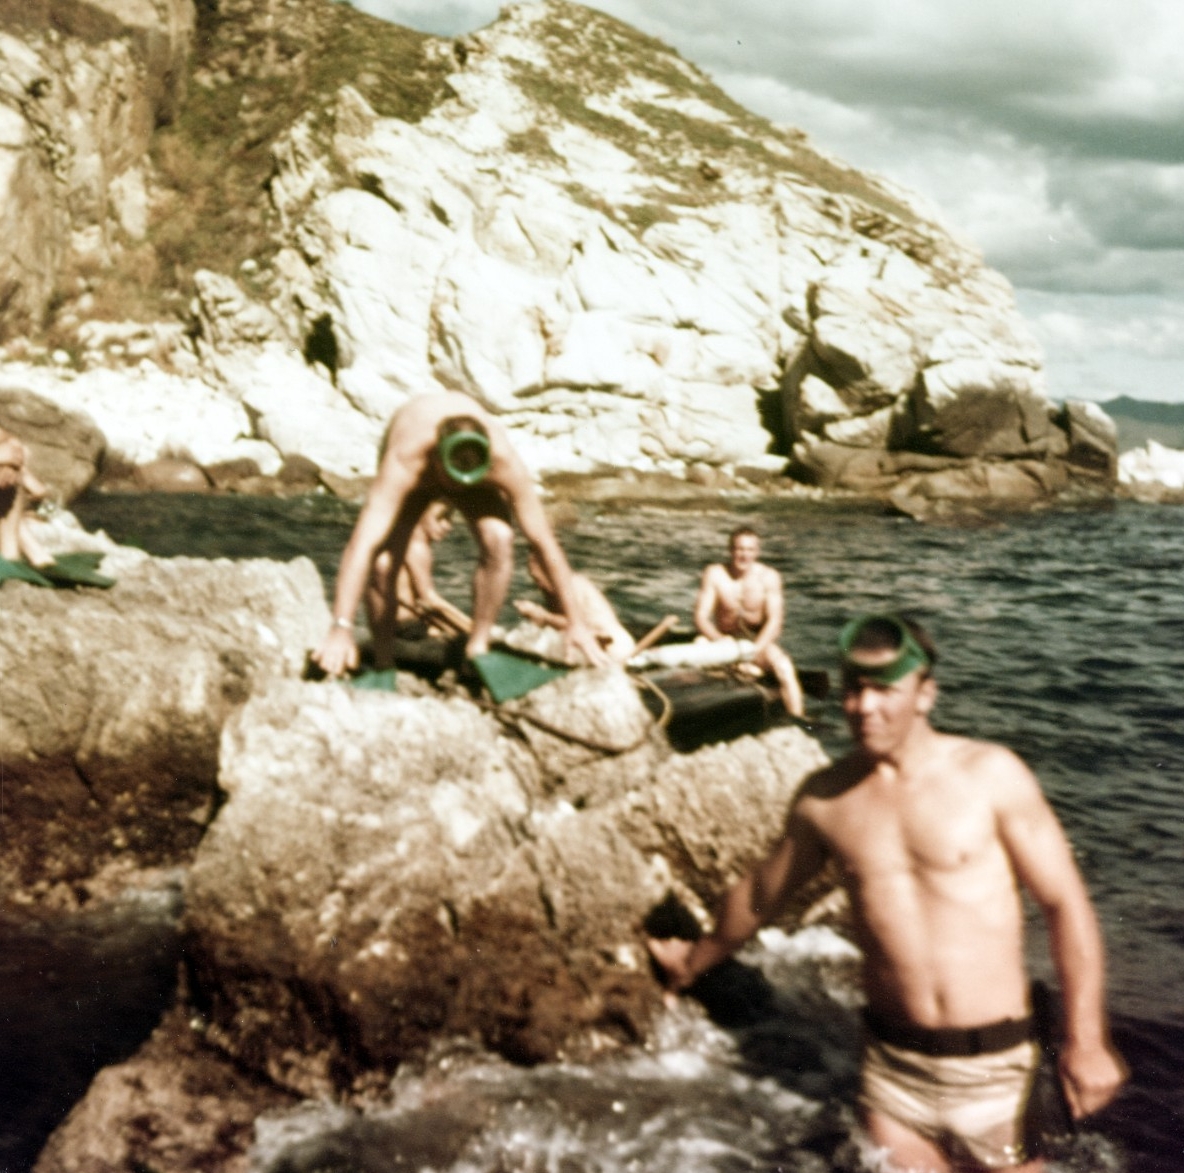 Operation "Fishnet", Korea, 1952